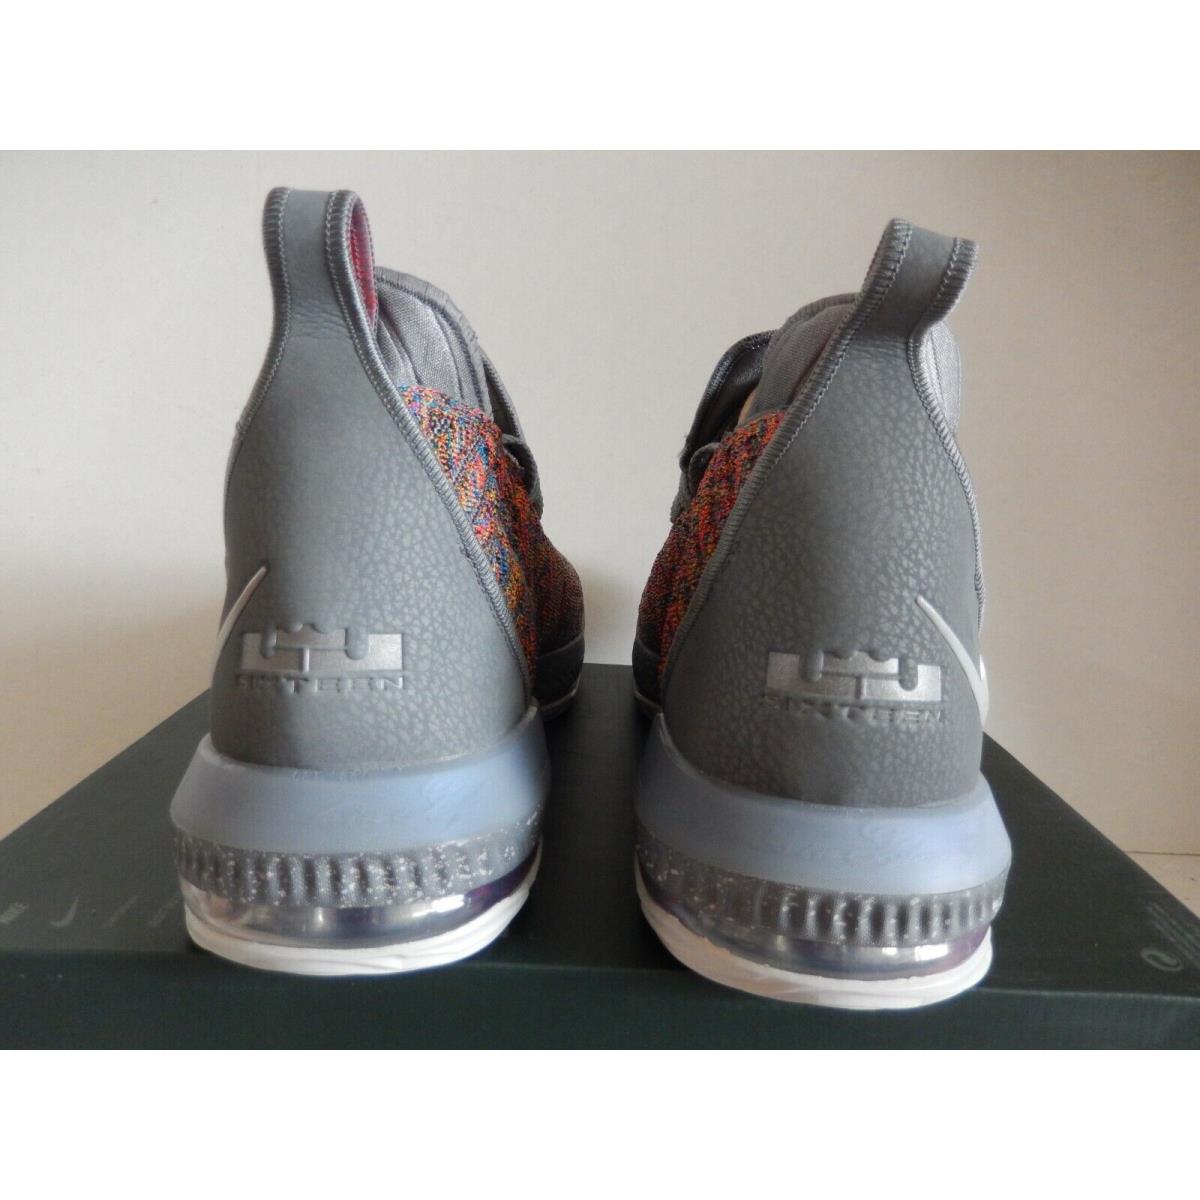 Nike shoes Lebron XVI - Multicolor 2